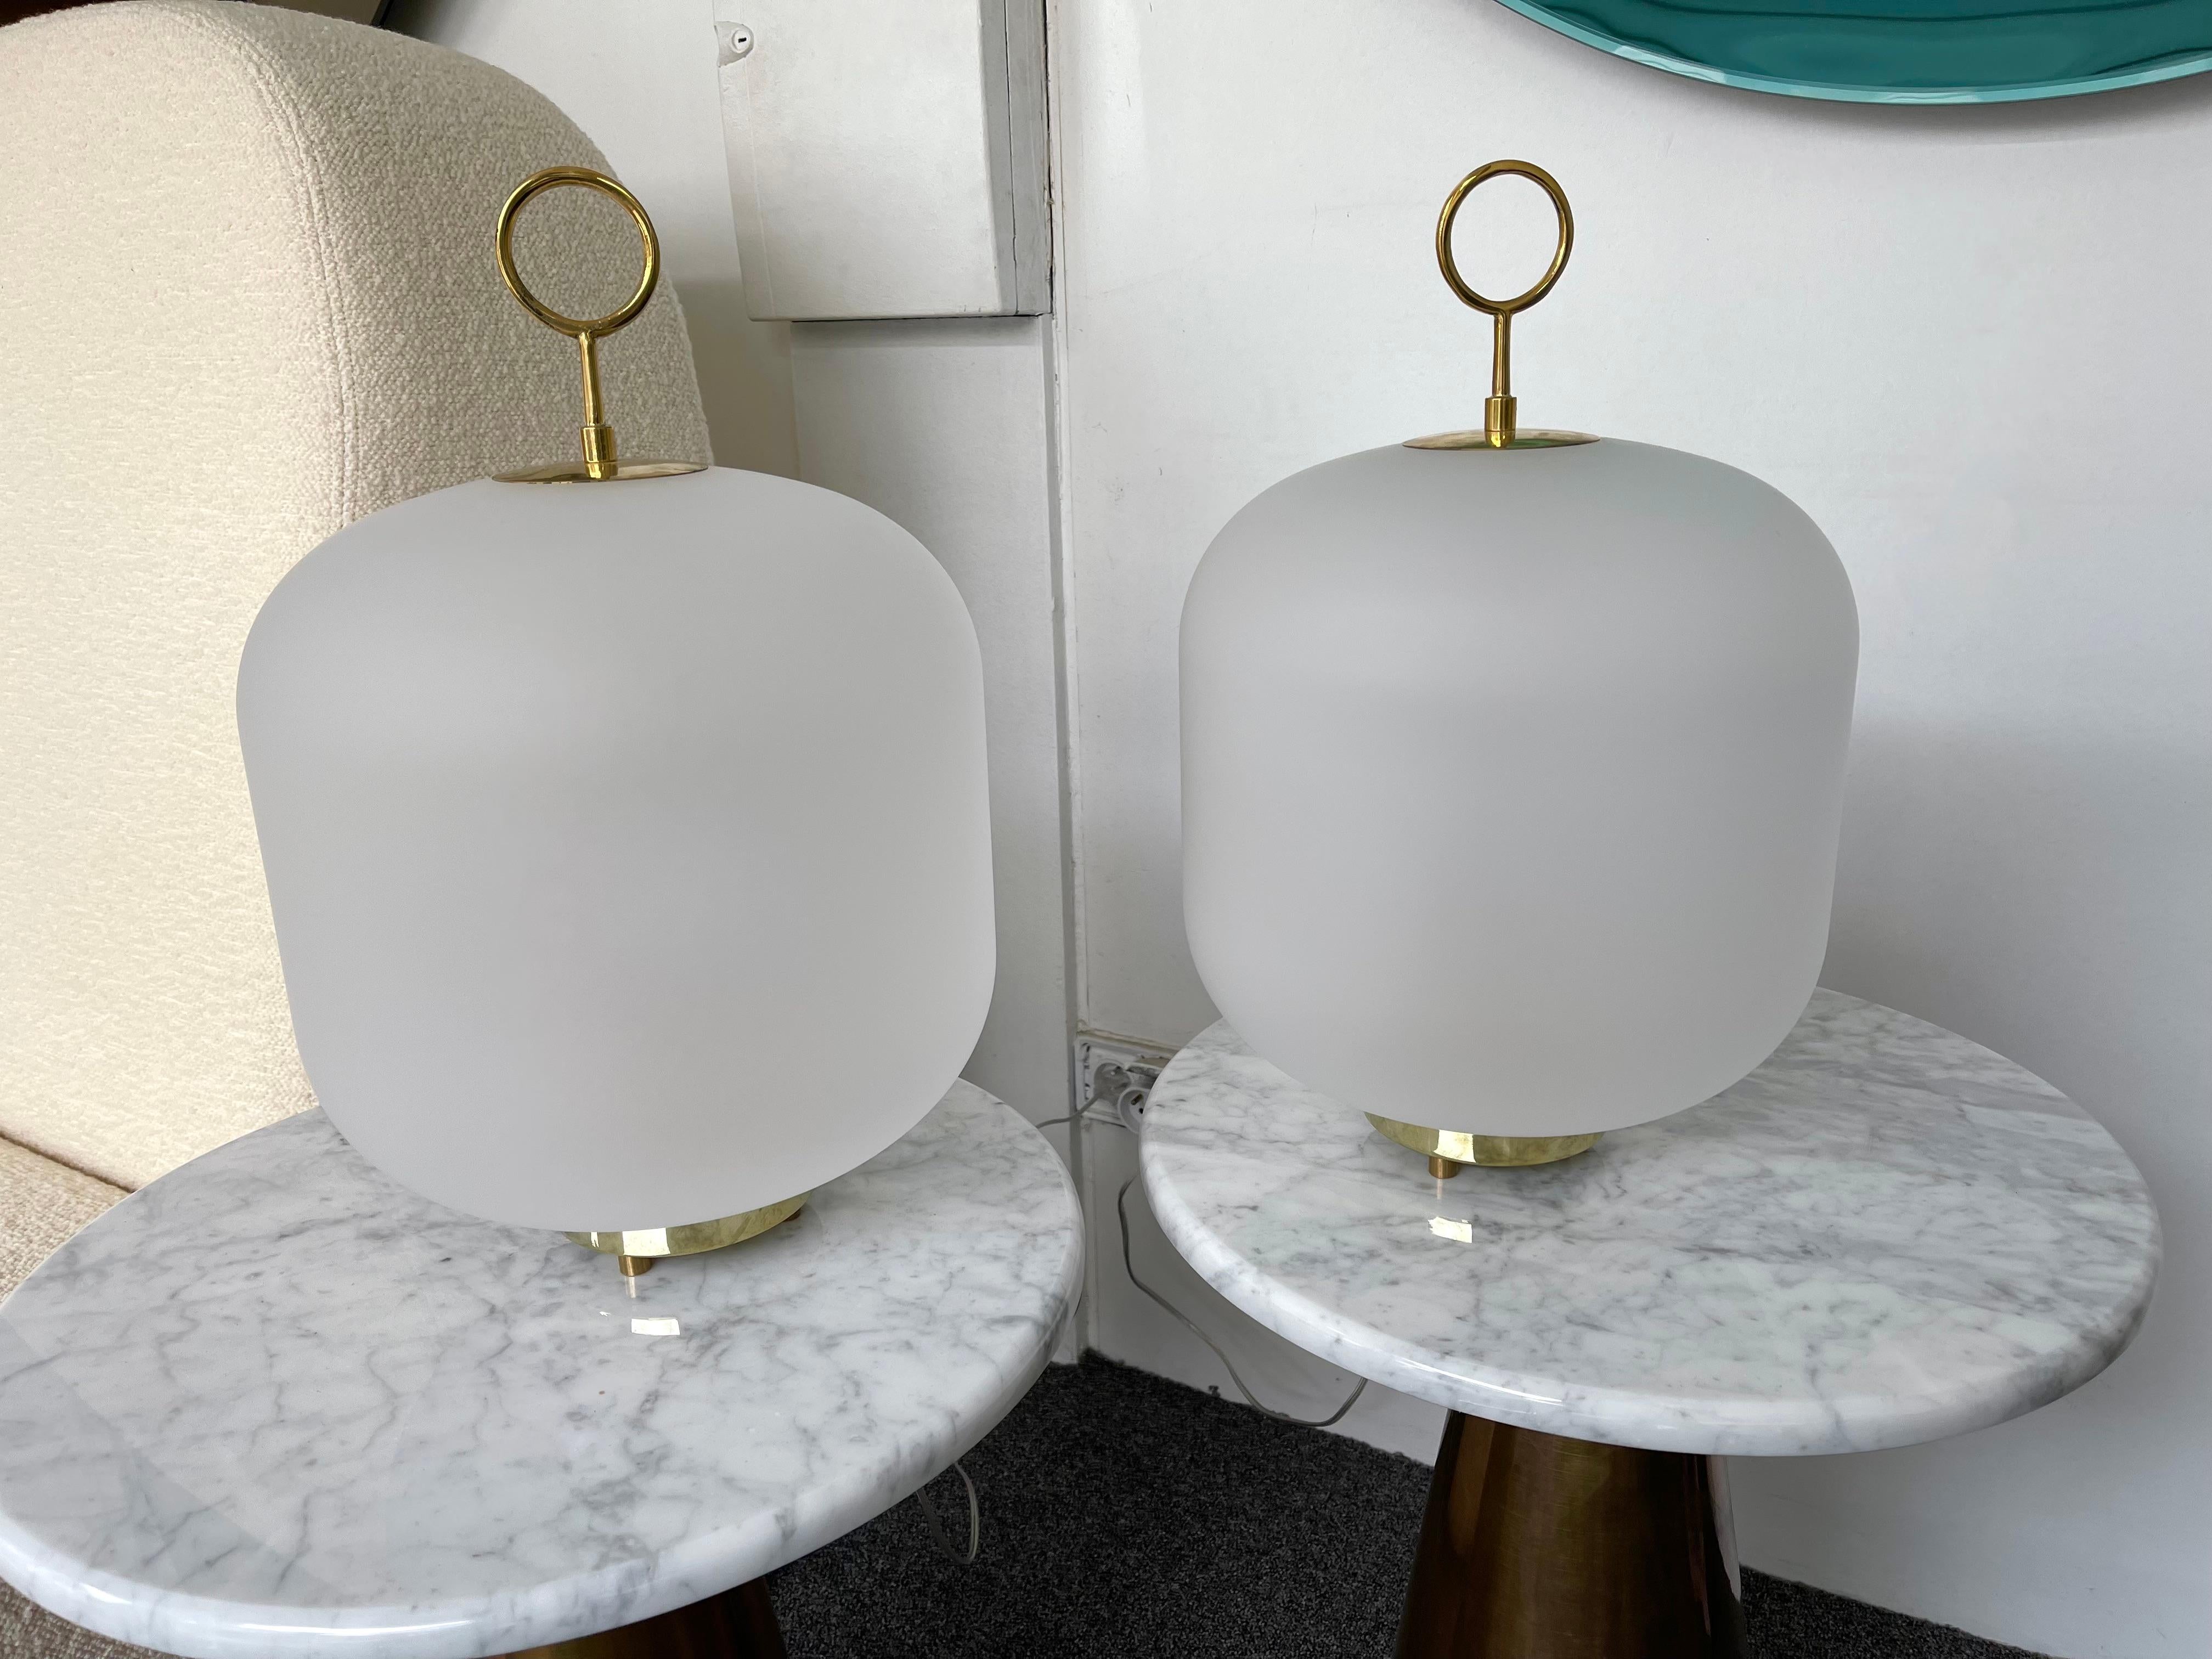 Pair of Contemporary italian design Large size of the Can lamp model, Murano glass and brass. Small artisanal production from Murano. In the mood of Mid-Century Modern, Jean Royere, Stilnovo, Arteluce, Arredoluce, Venini, Vistosi, Mazzega, Esperia,